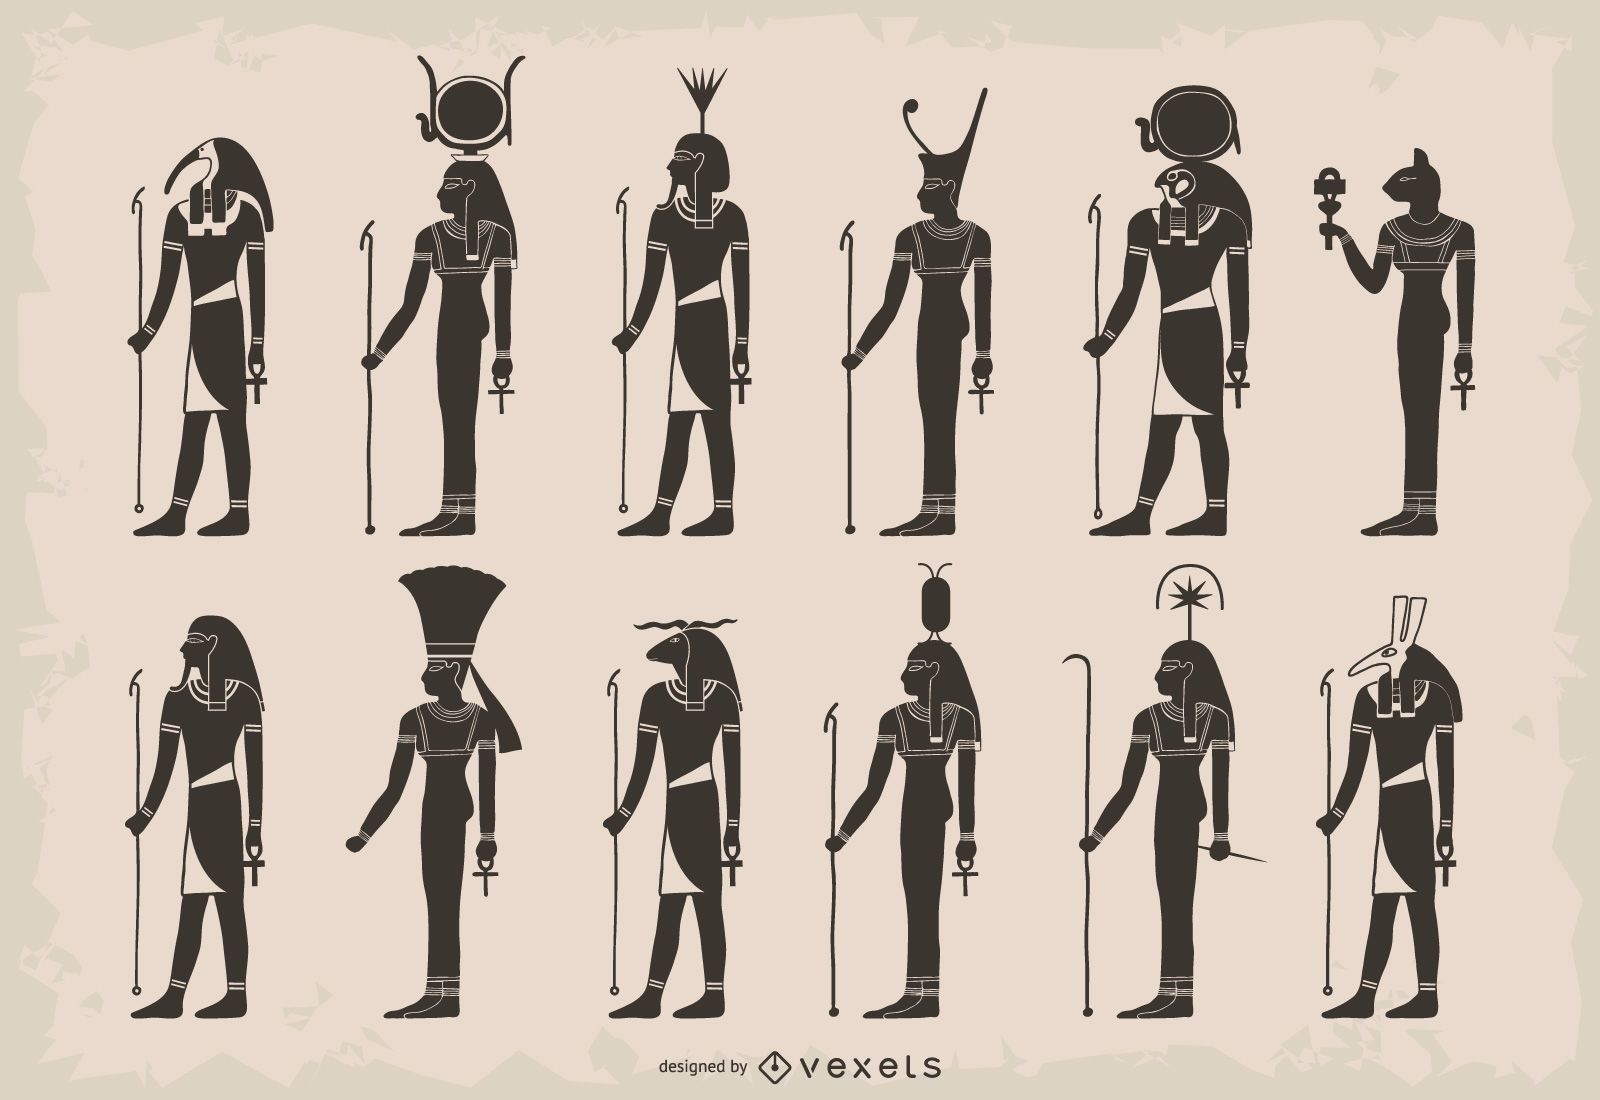 Gods Of Ancient Egypt